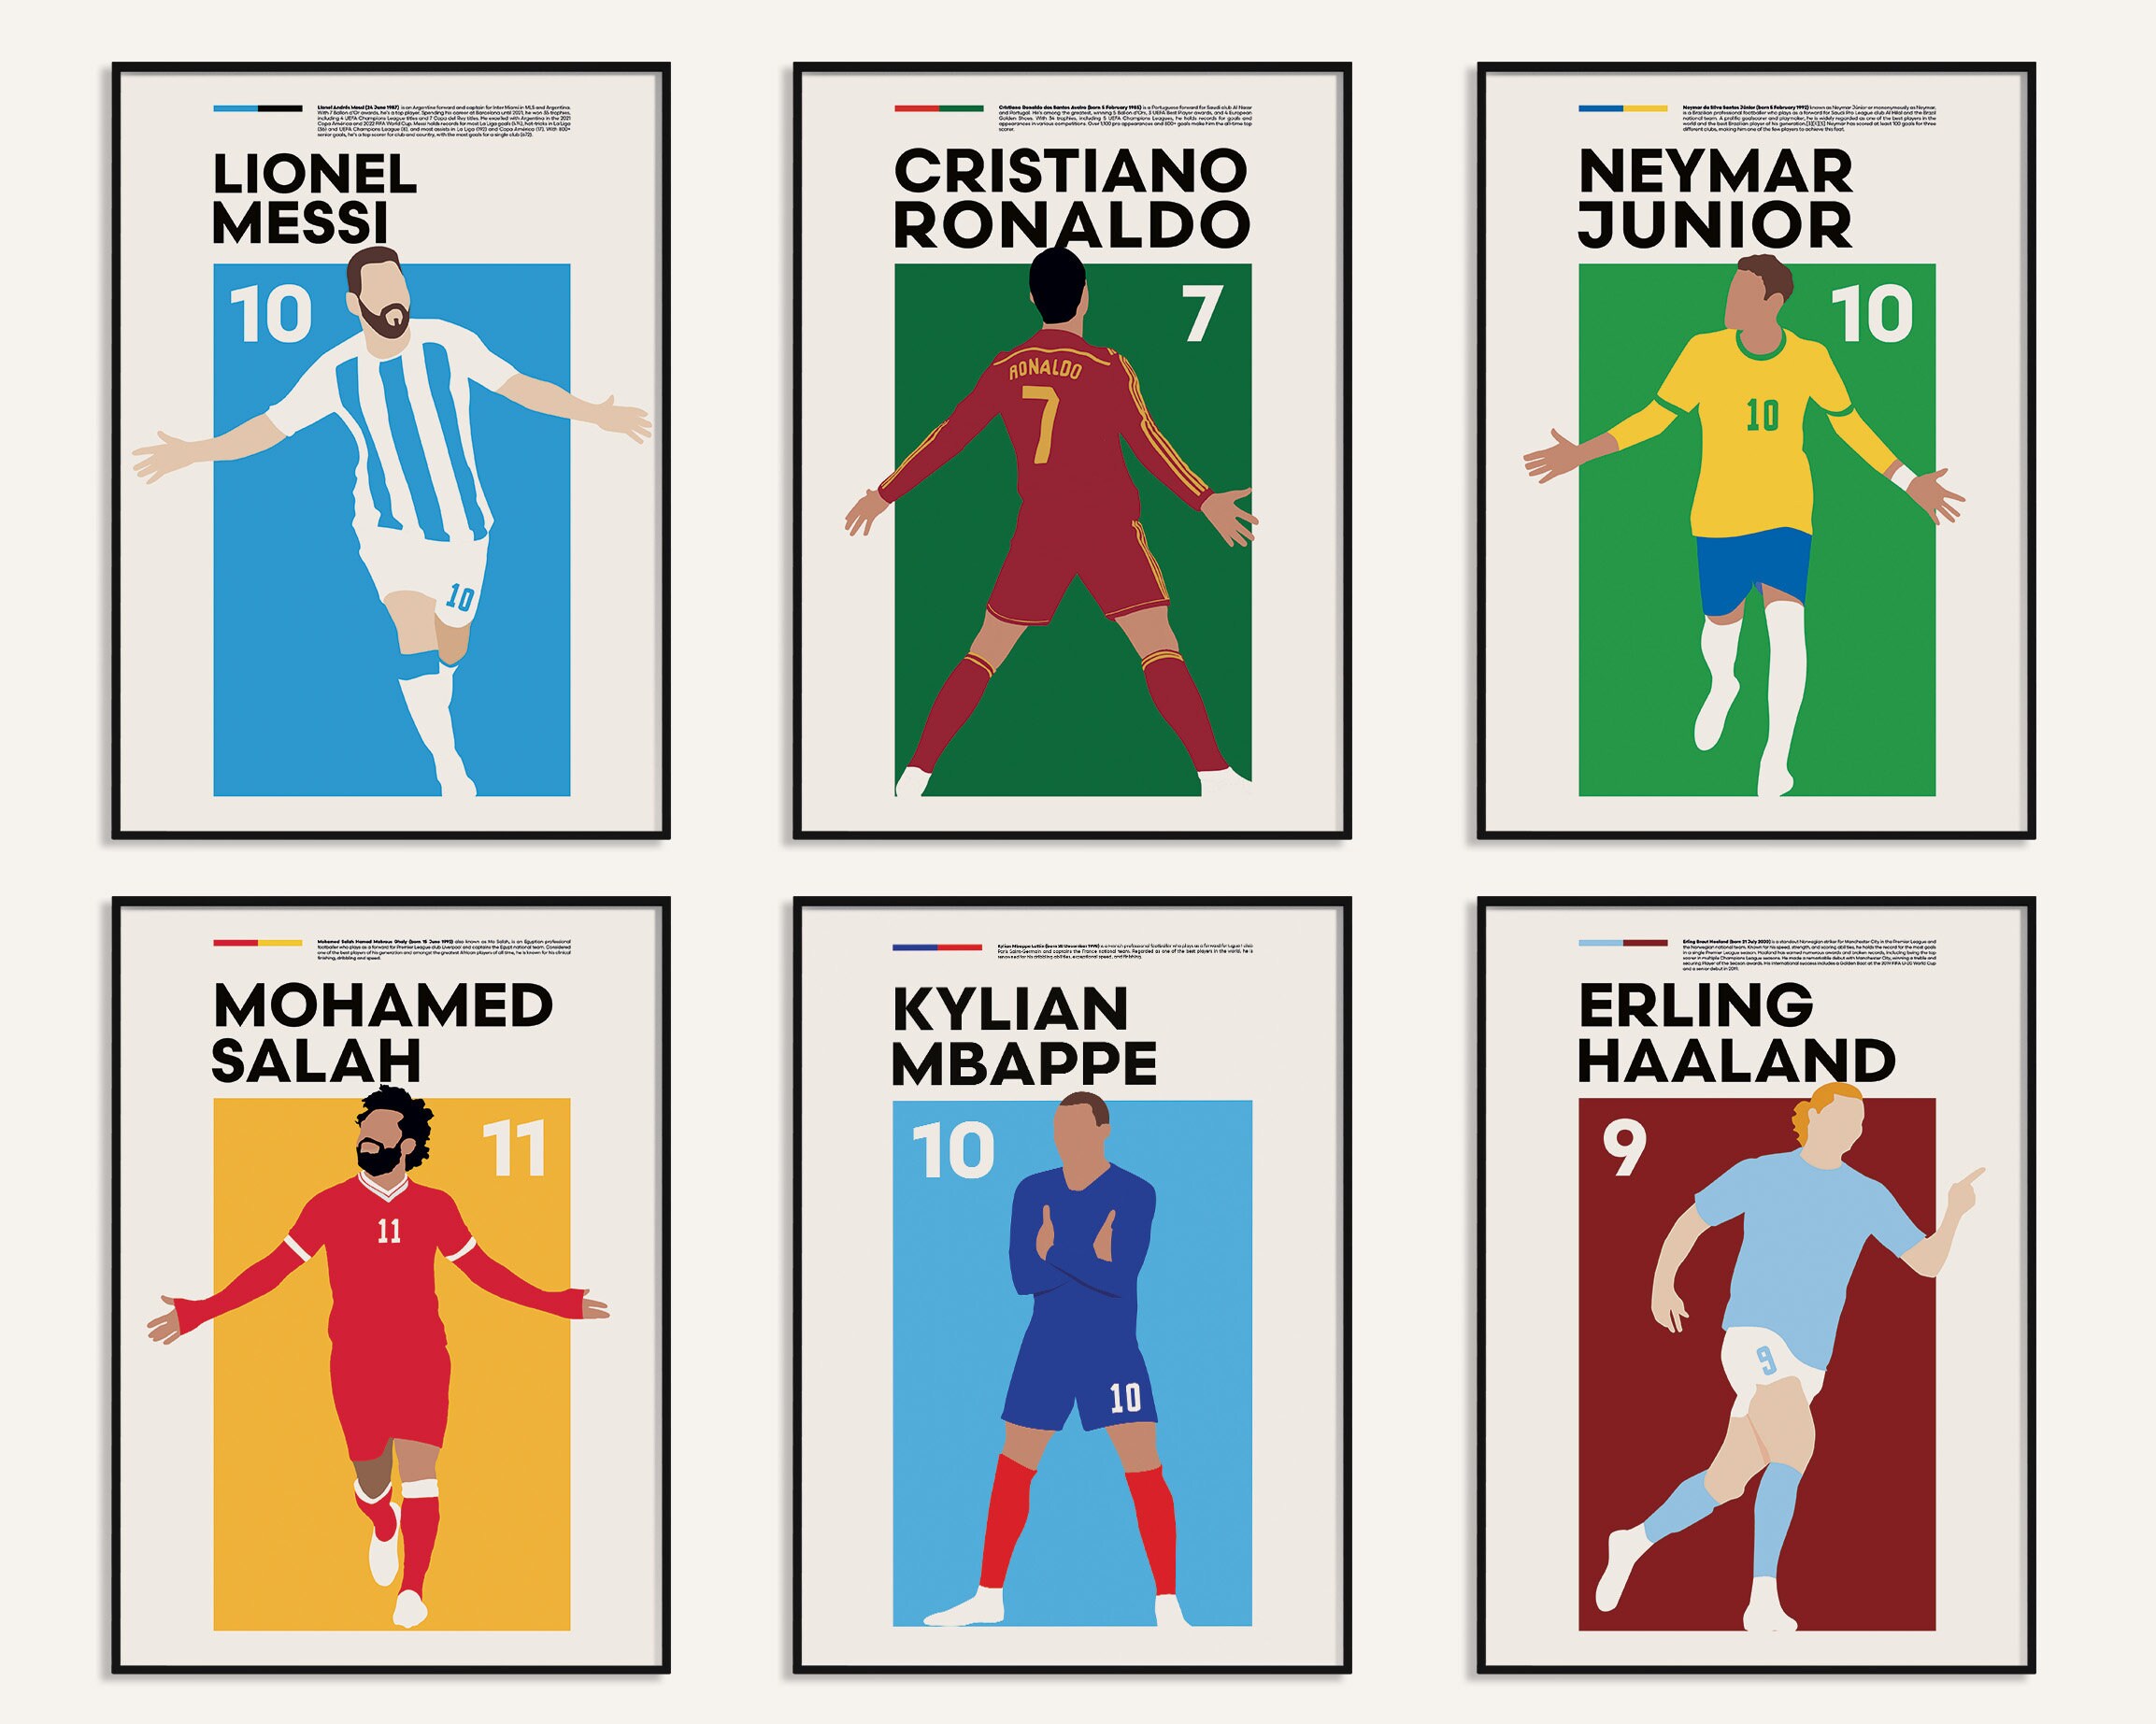 Pele Neymar Maradona Messi - The Next Generation - Unisex T-Shirt - Brazil  Argentina Football Team Design Best Players In The World World Cup Qatar